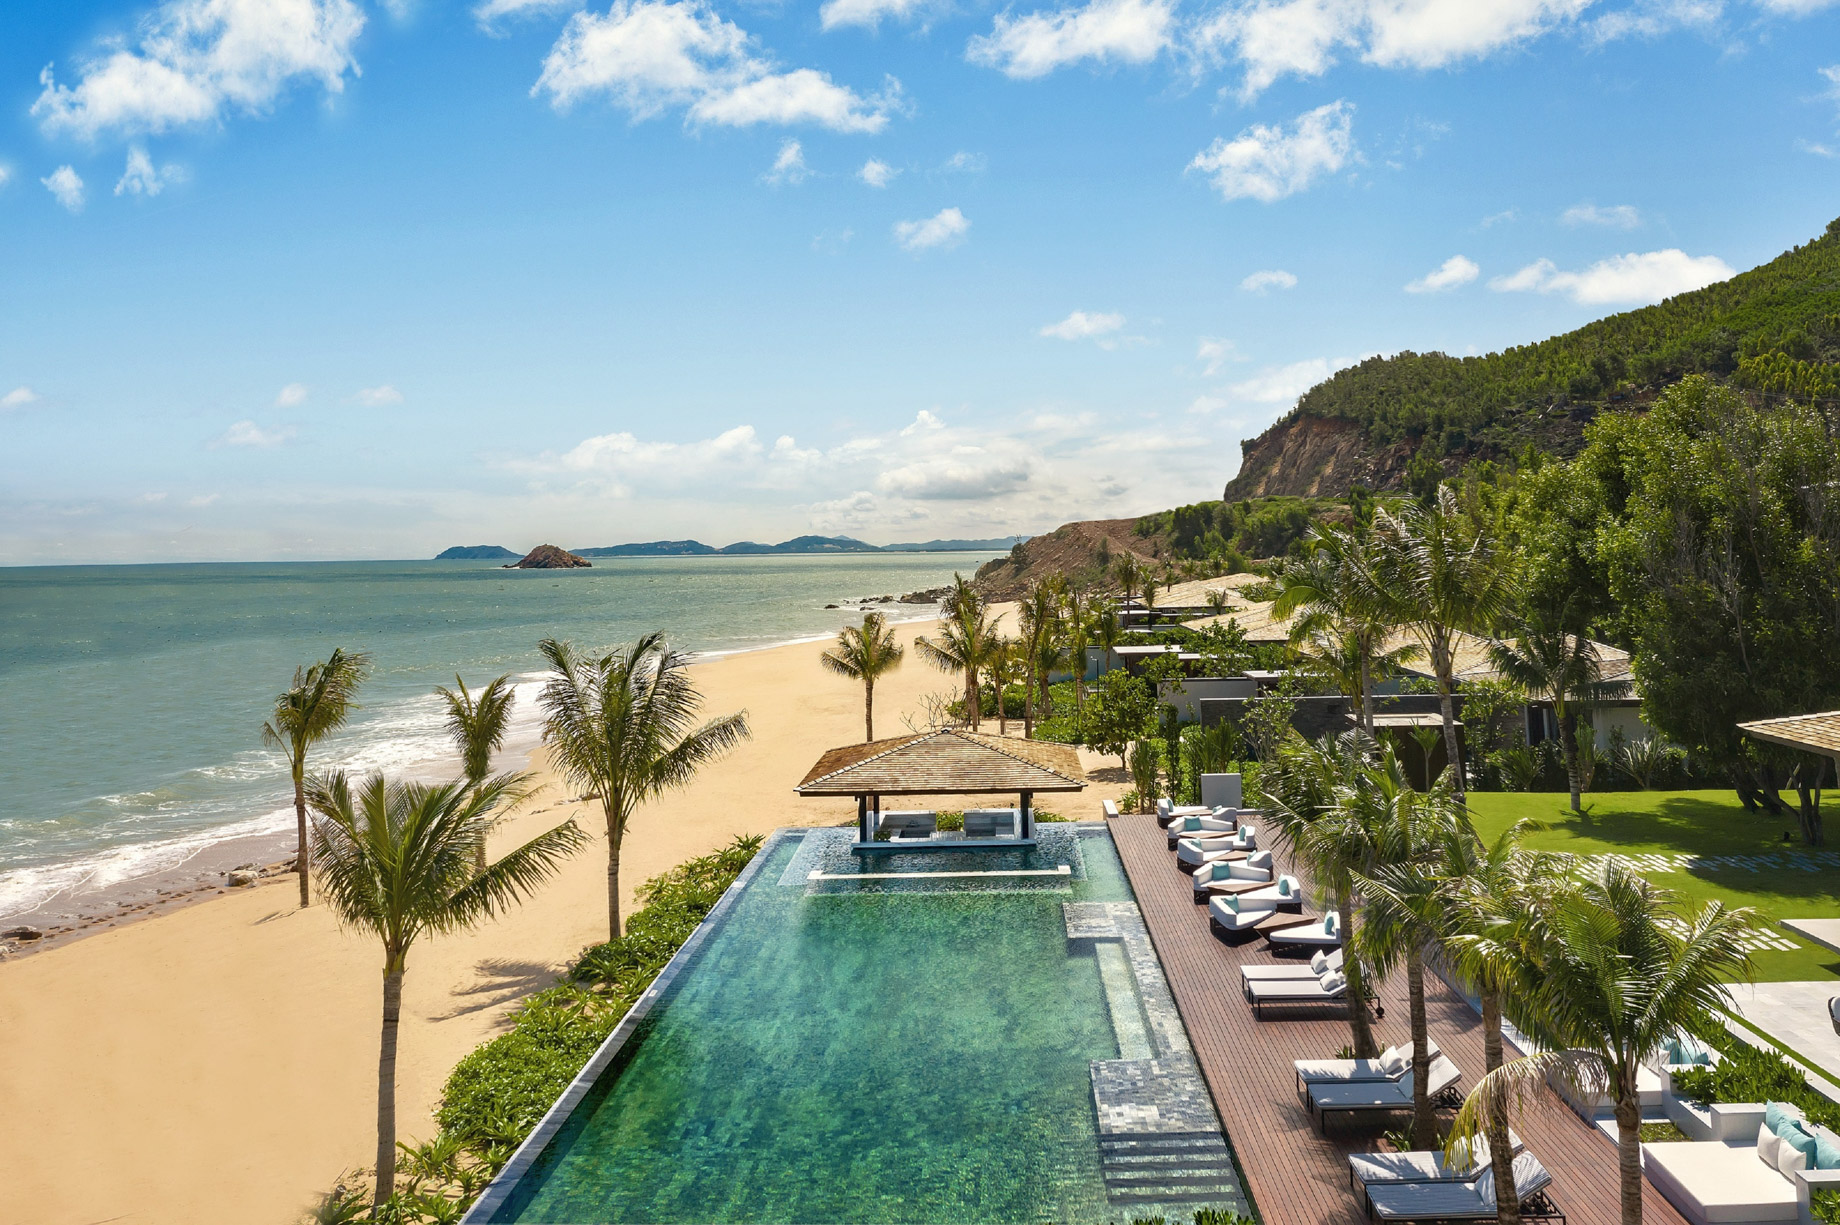 Anantara Quy Nhon Villas Resort - Quy Nhon, Vietnam - Pool Aerial View